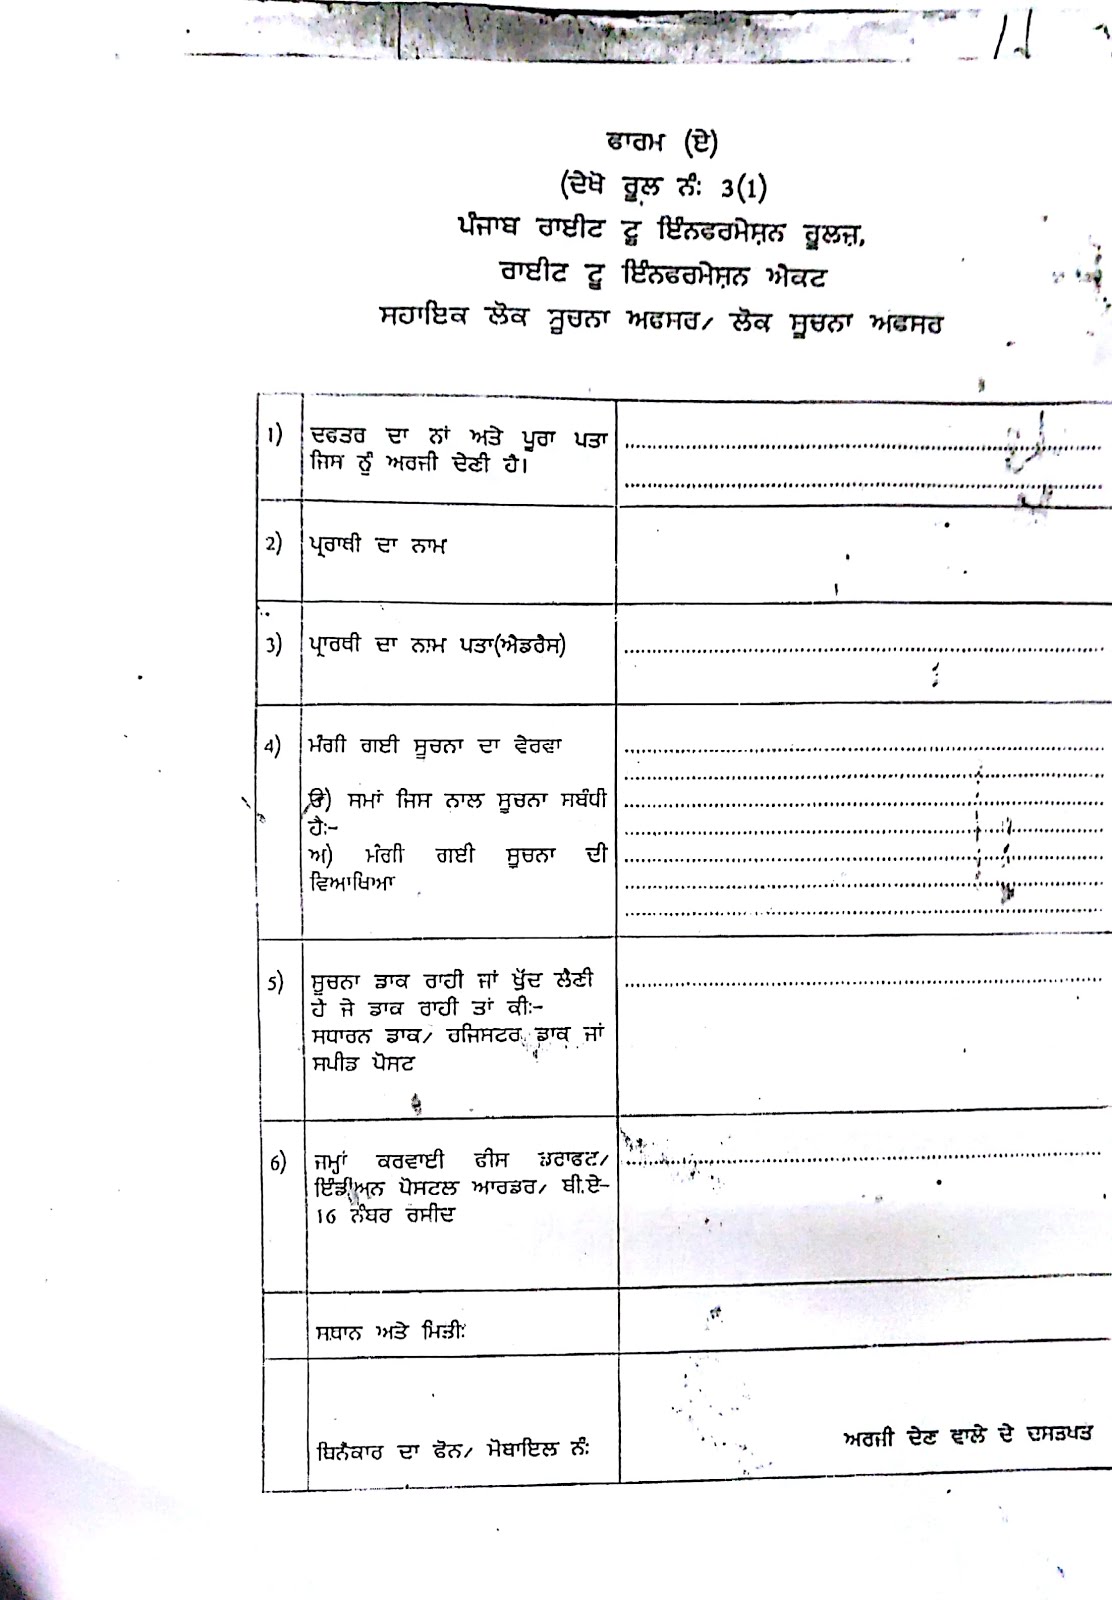 rti application form in marathi download pdf